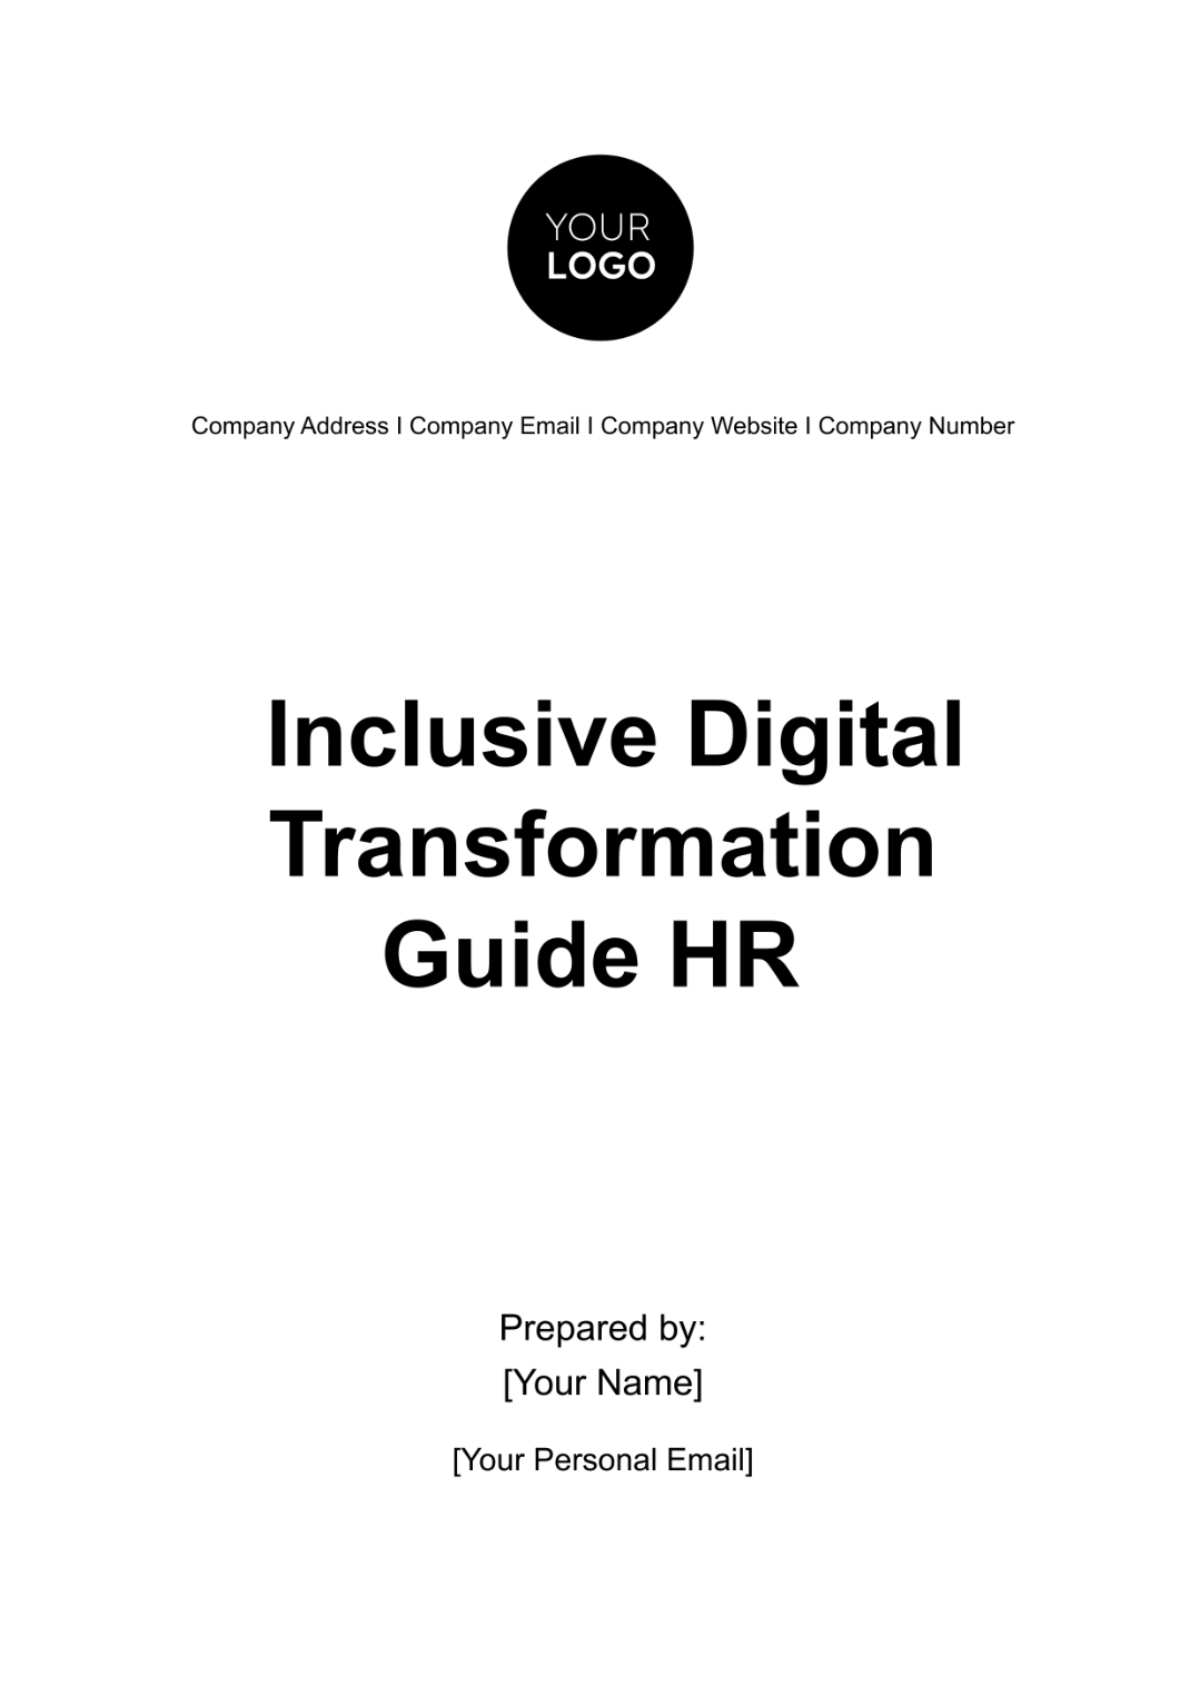 Free Inclusive Digital Transformation Guide HR Template